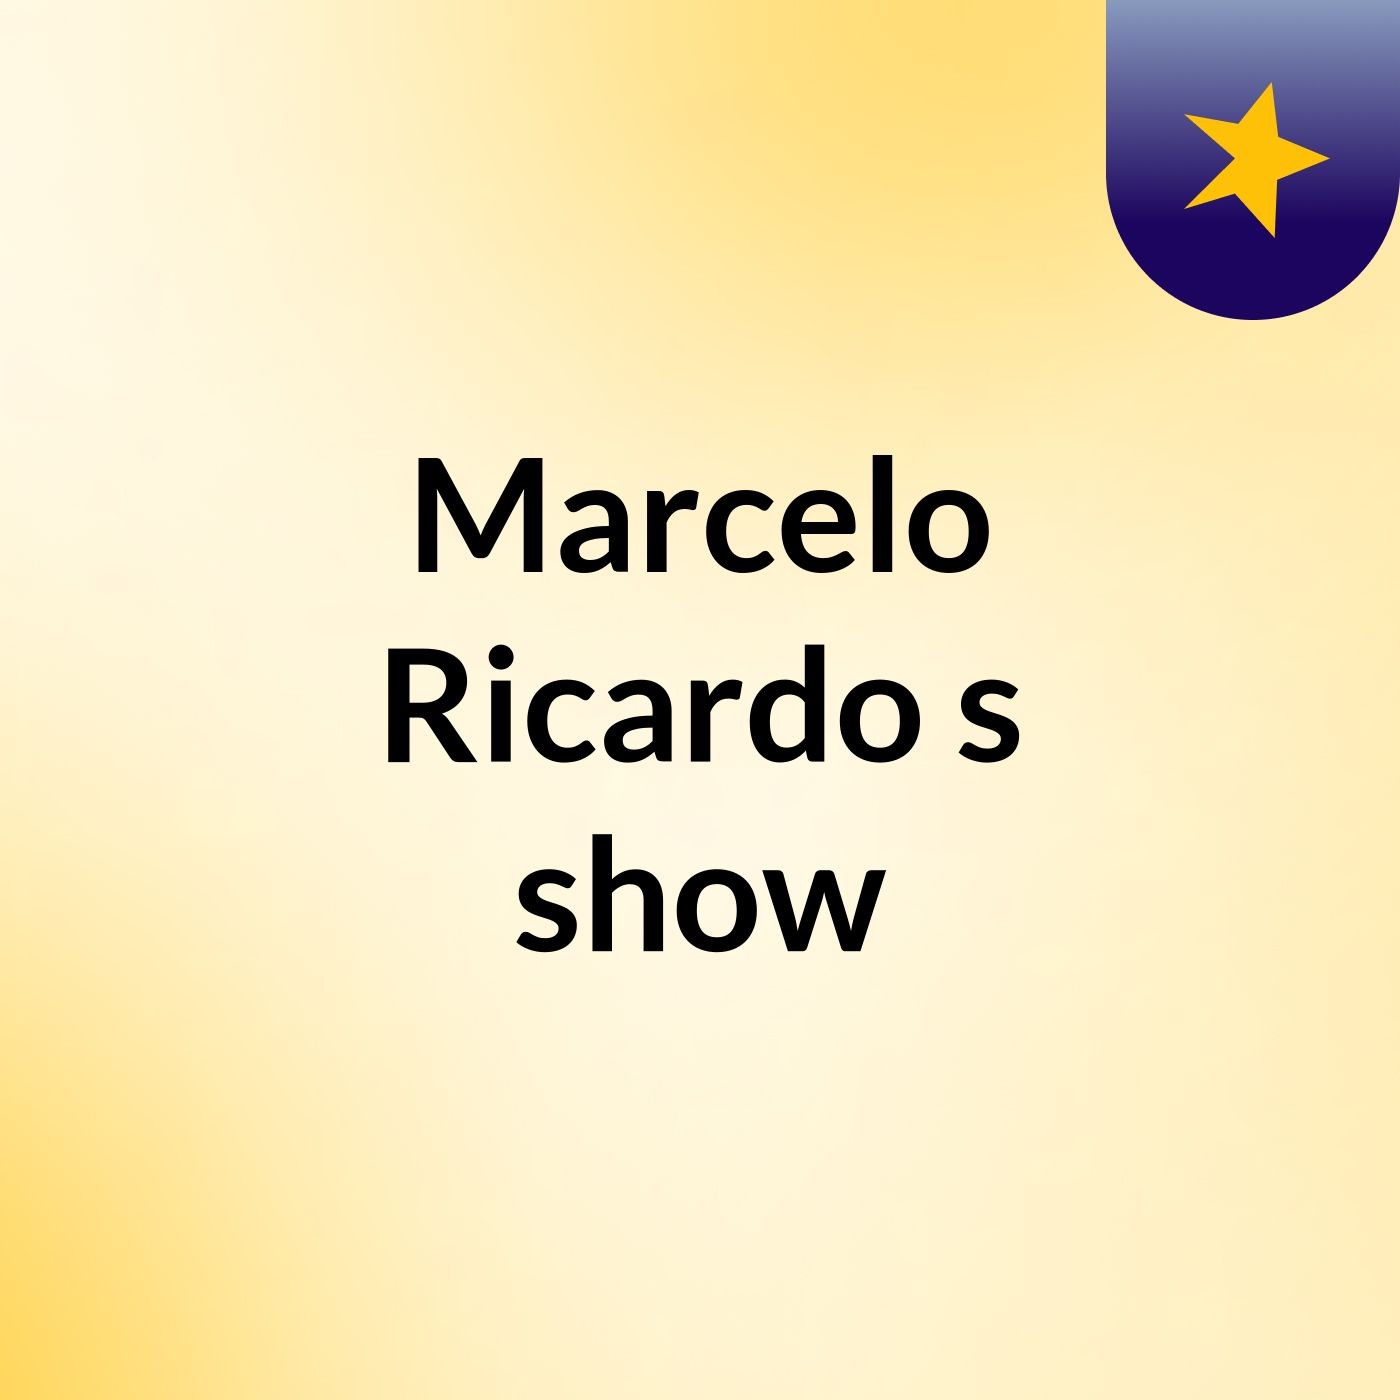 Marcelo Ricardo's show